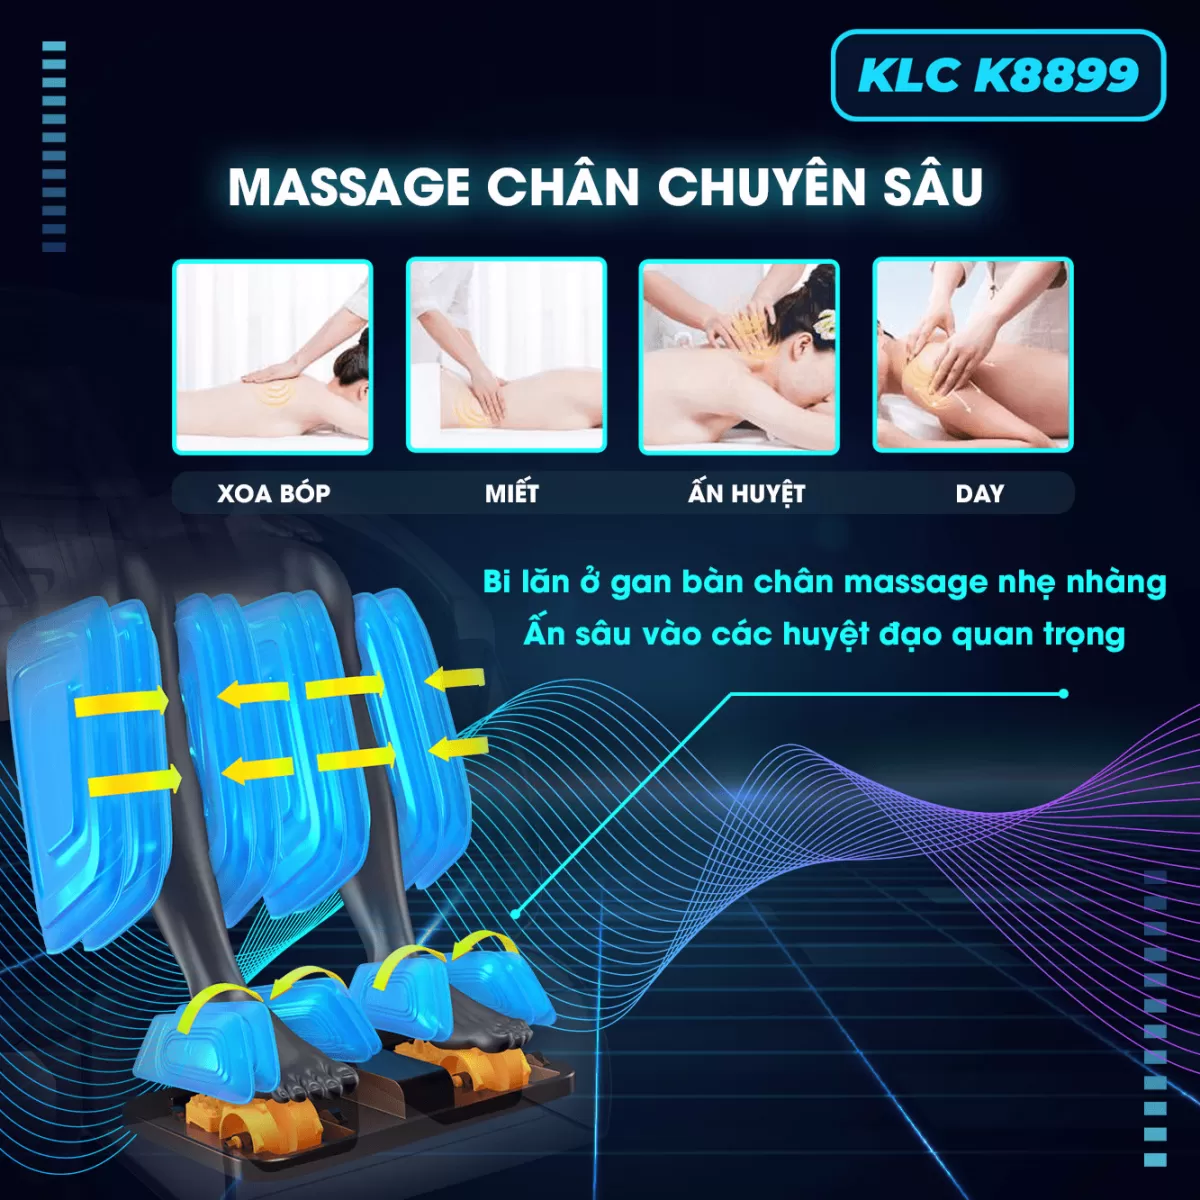 Massage chân chuyên sâu của Ghế Massage KLC K8899